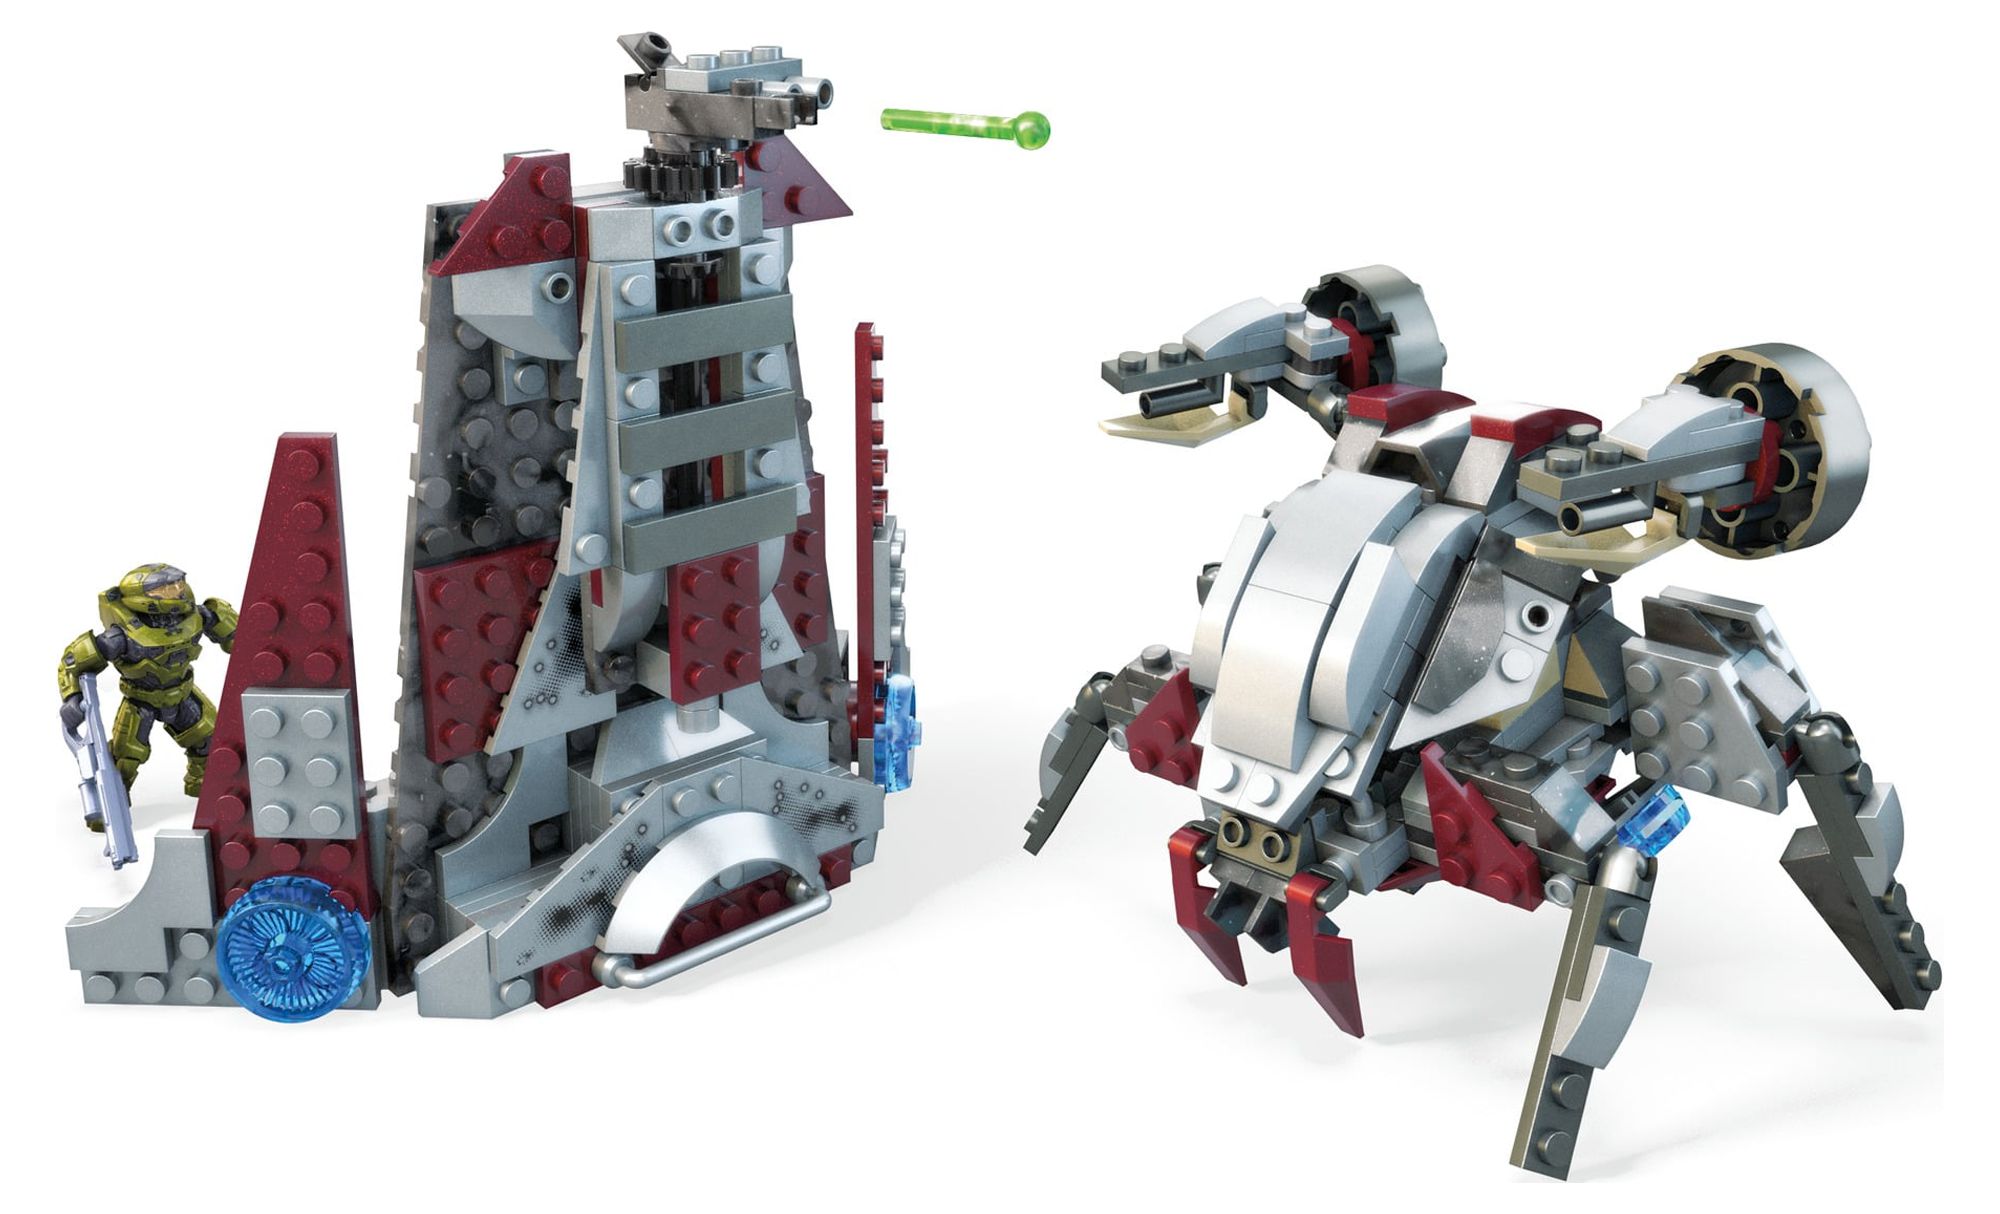 MEGA Halo Skift Intercept Building Kit with Spartan MK VII Action Figure (452 Pieces) - image 3 of 7